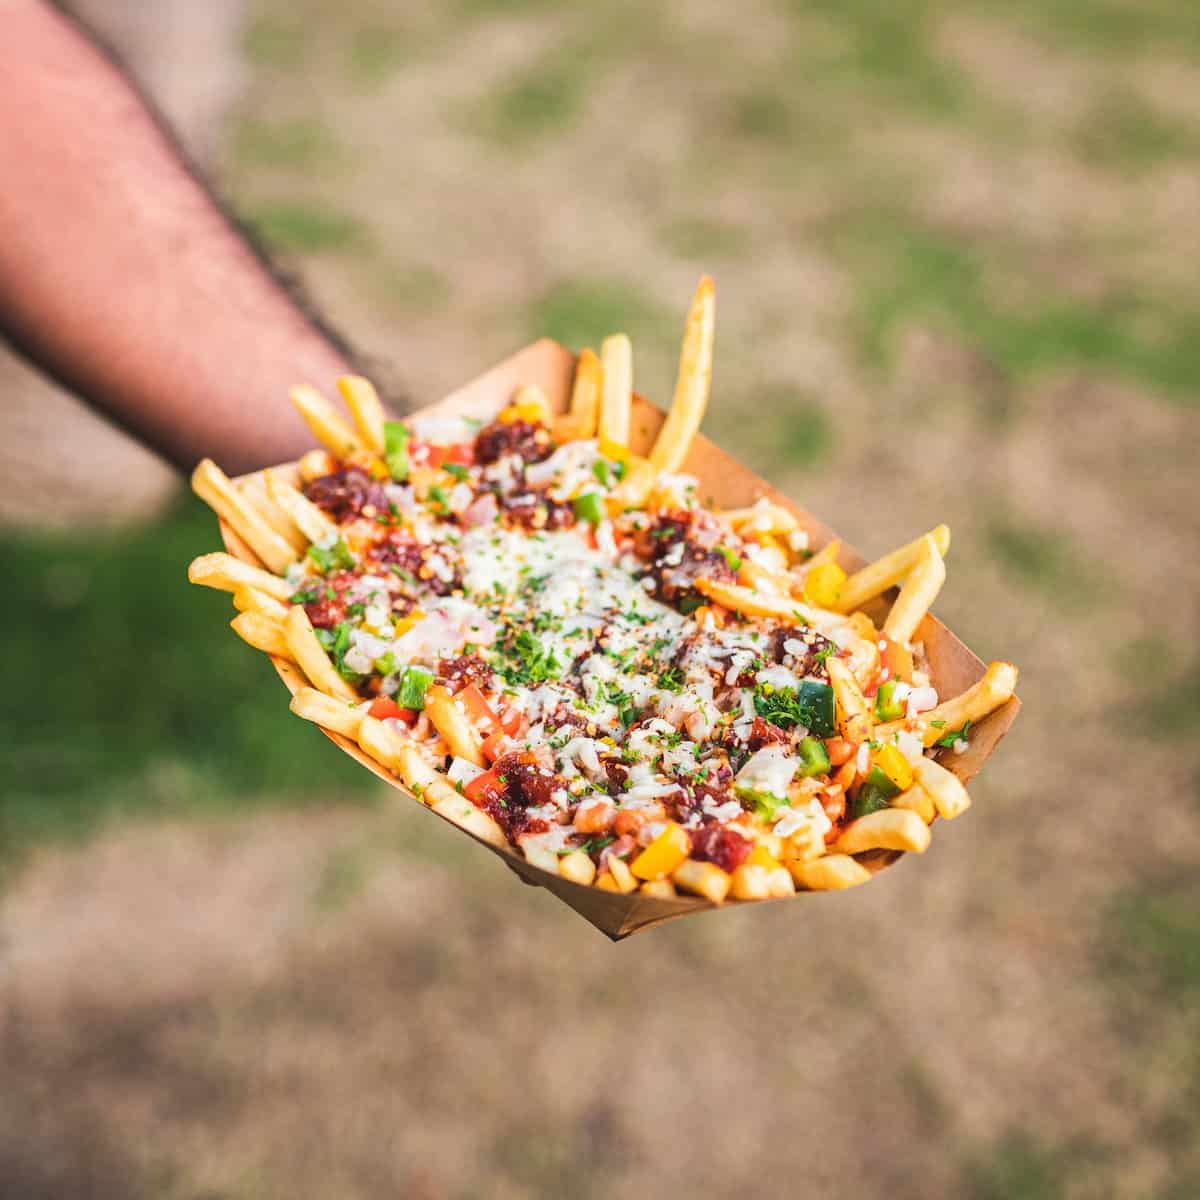 hand holding a tray of loaded french fries — potato bar idea.